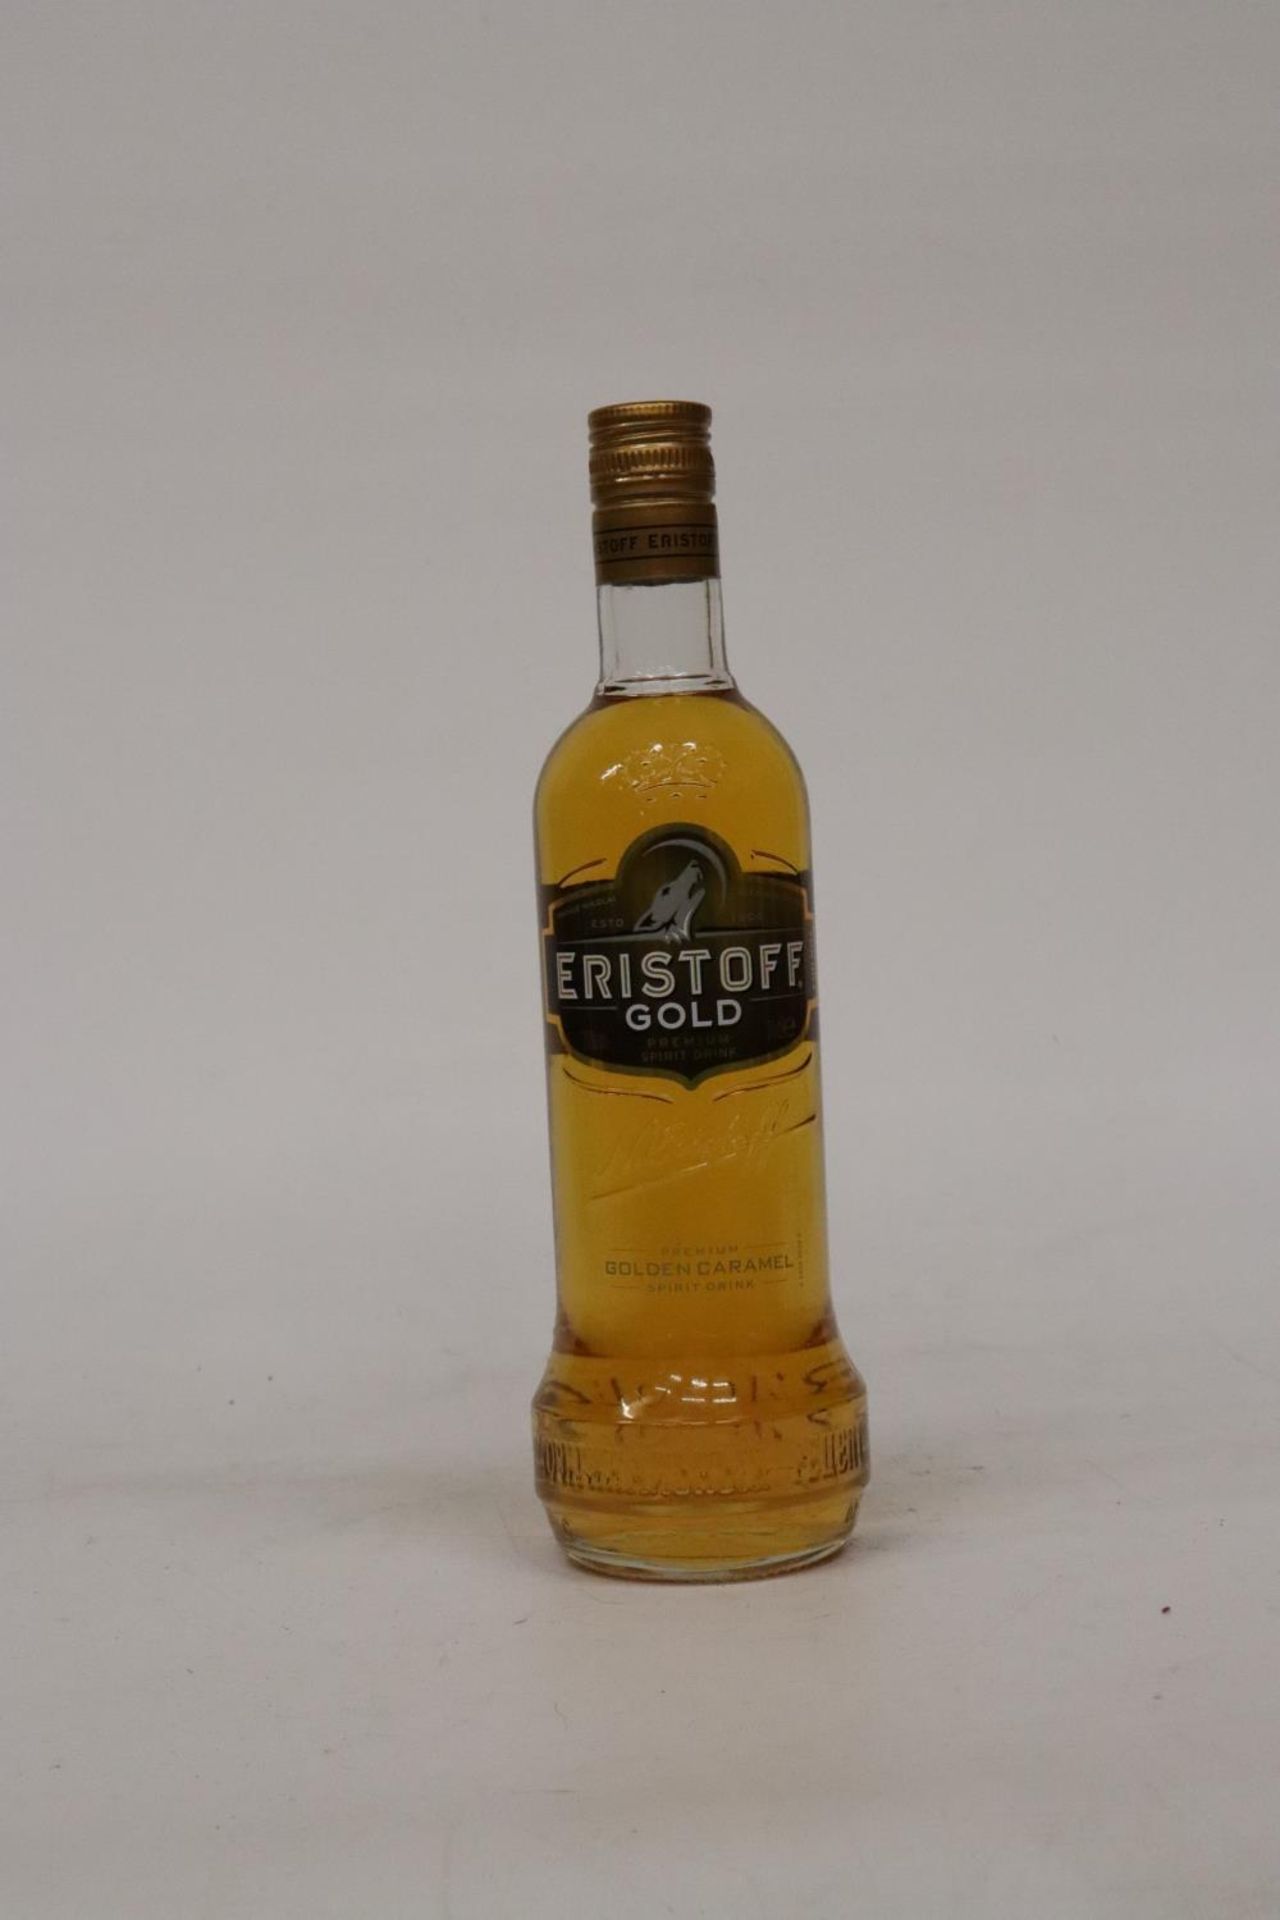 A 70CL BOTTLE OF ERISTOFF GOLD SPIRIT